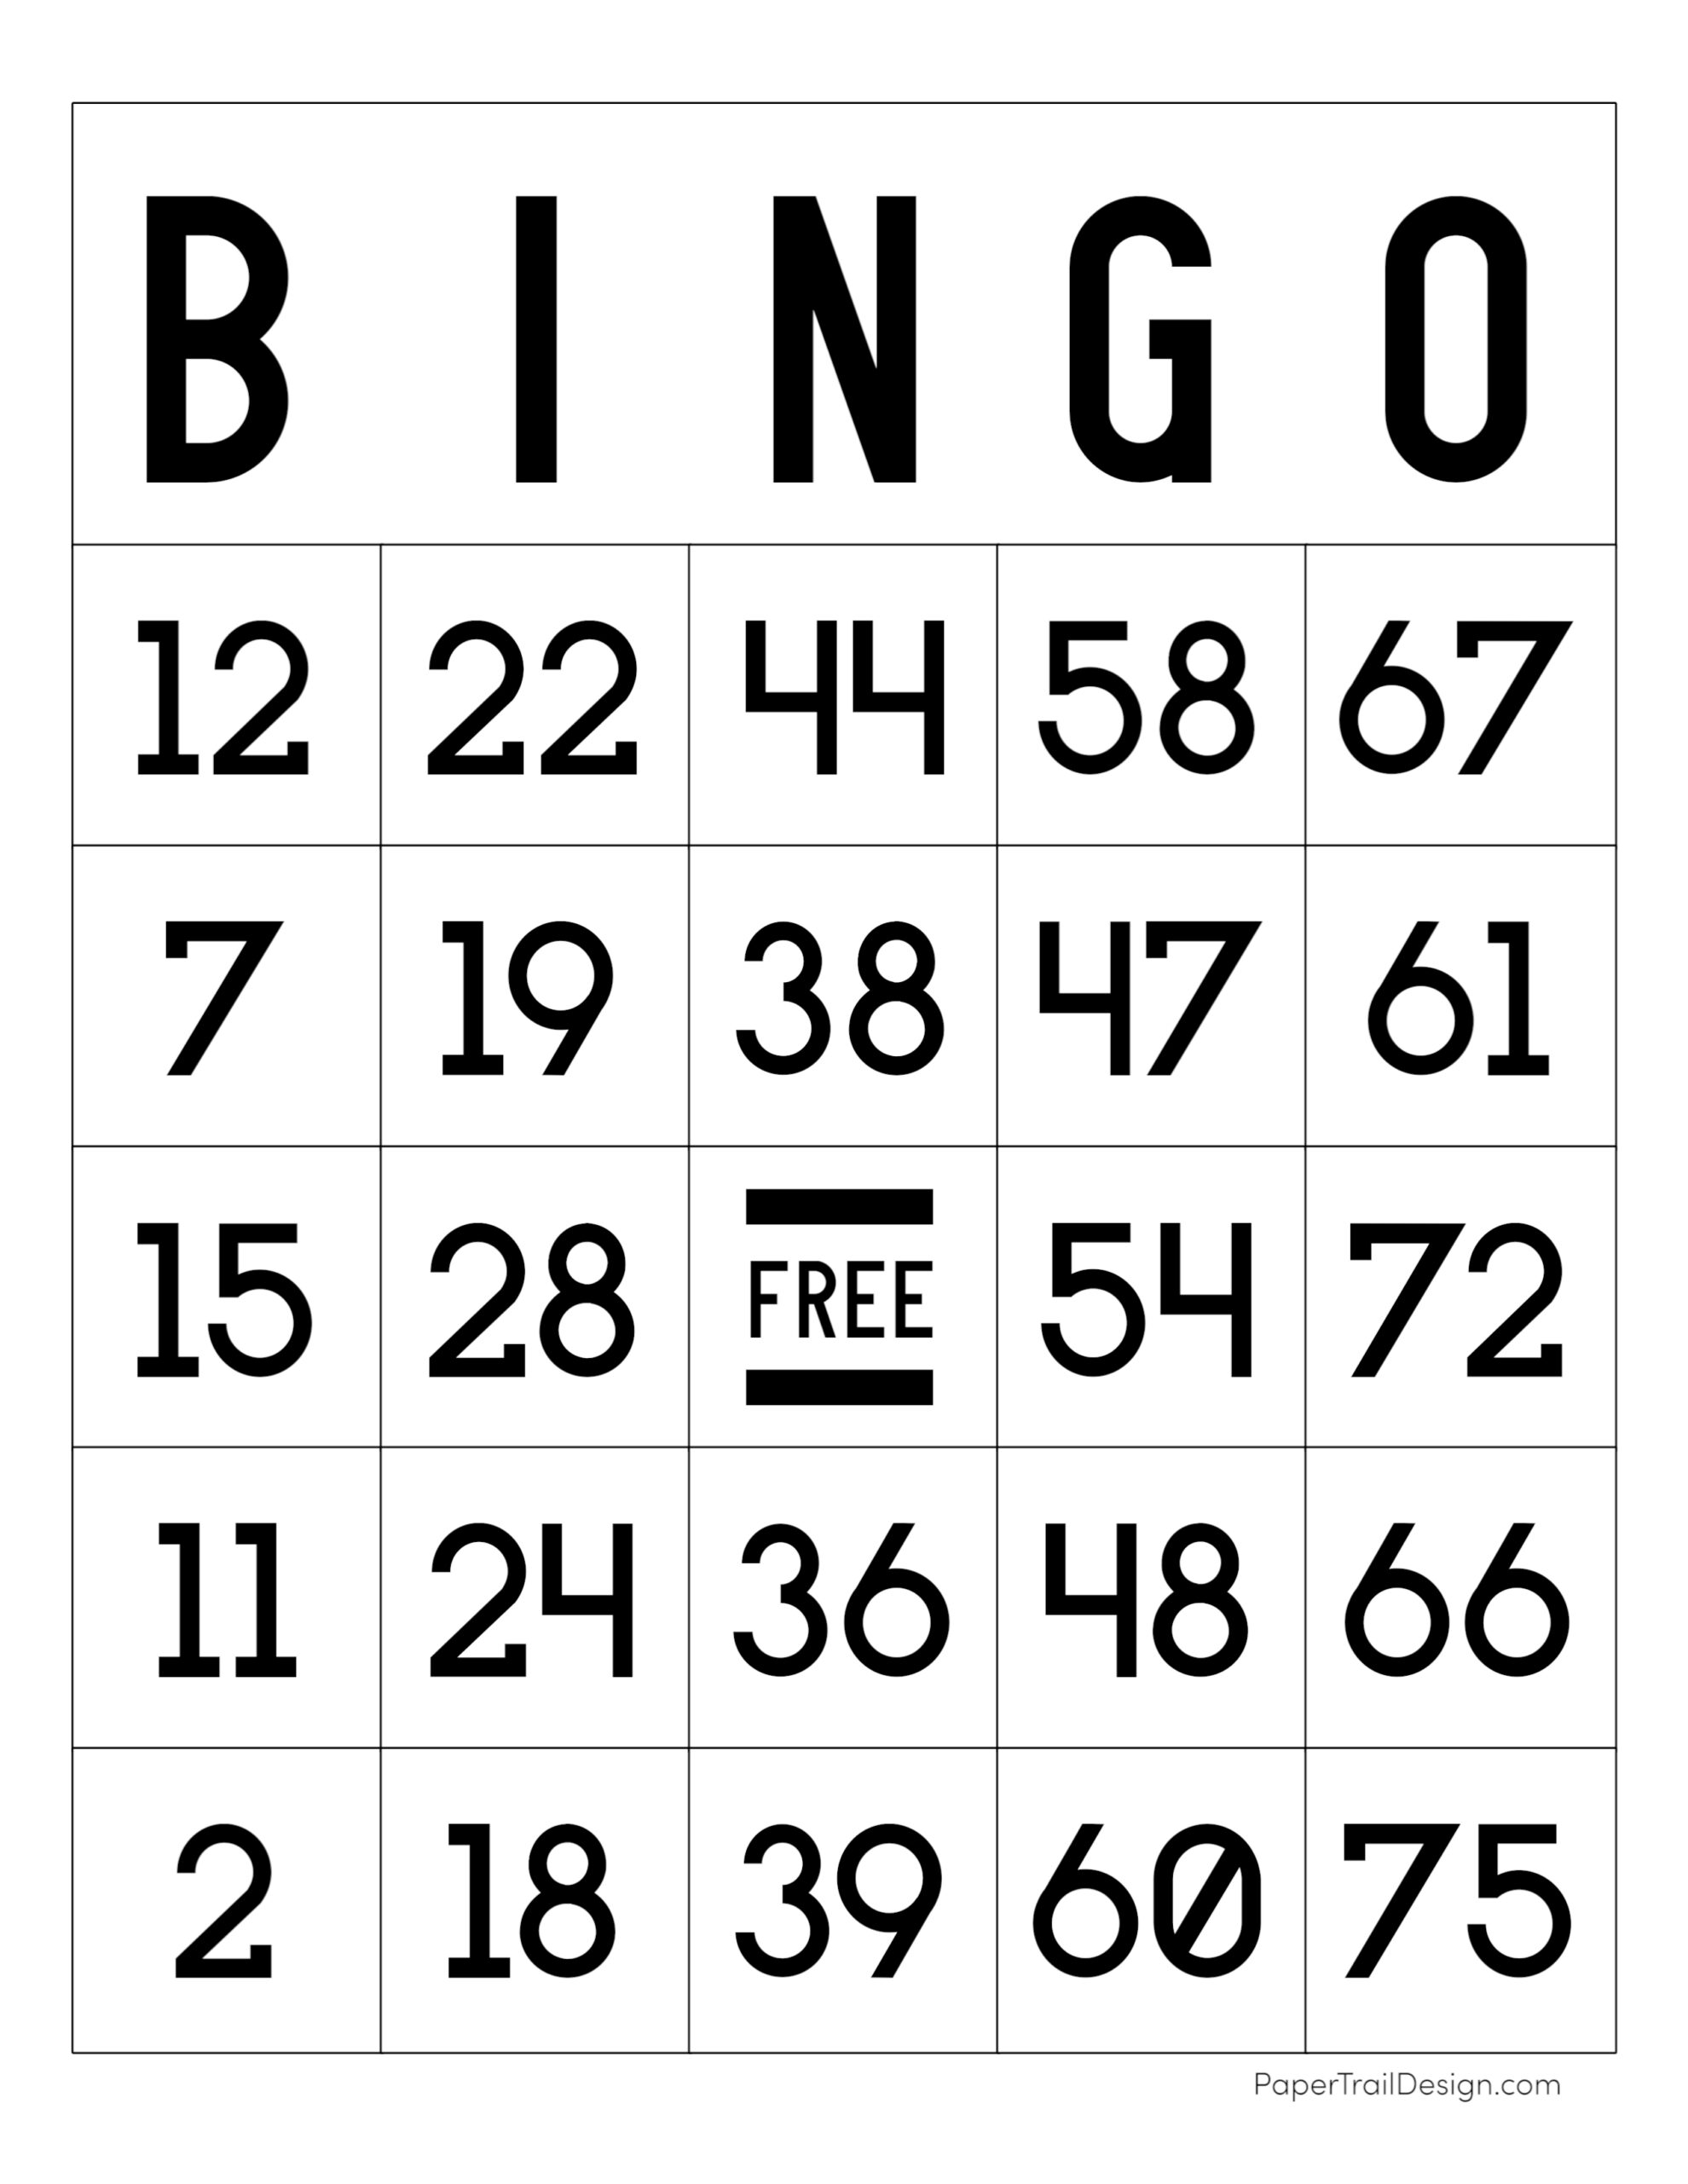 bingo at home online free